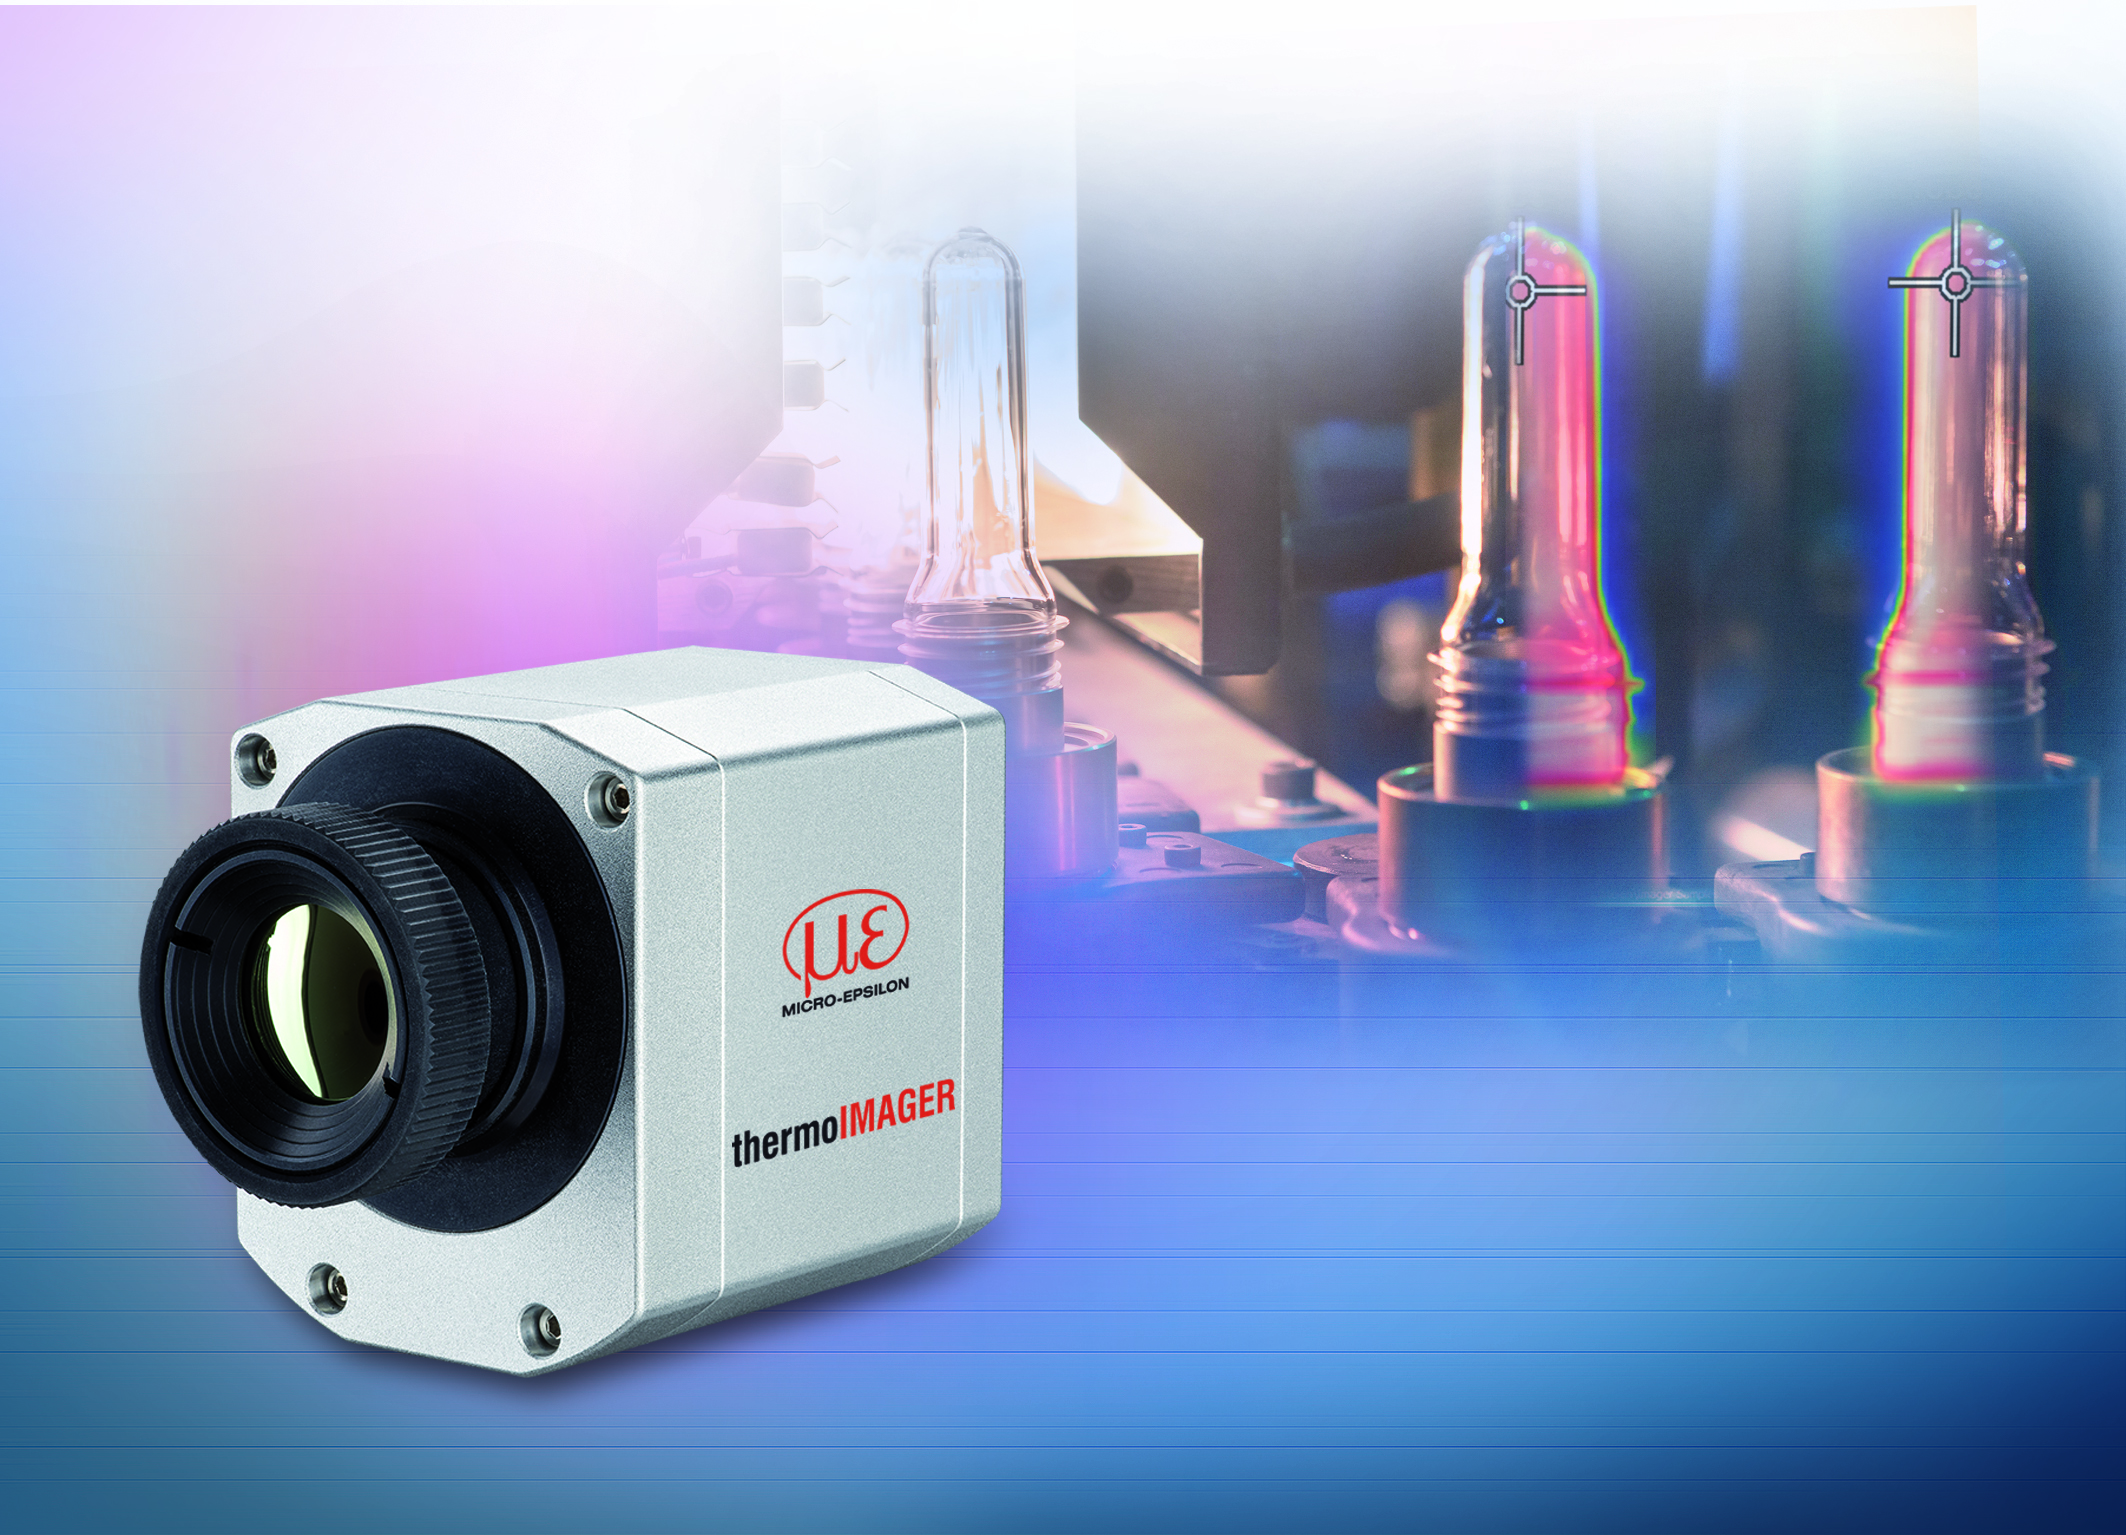 Thermal imaging camera for industrial temperature monitoring tasks